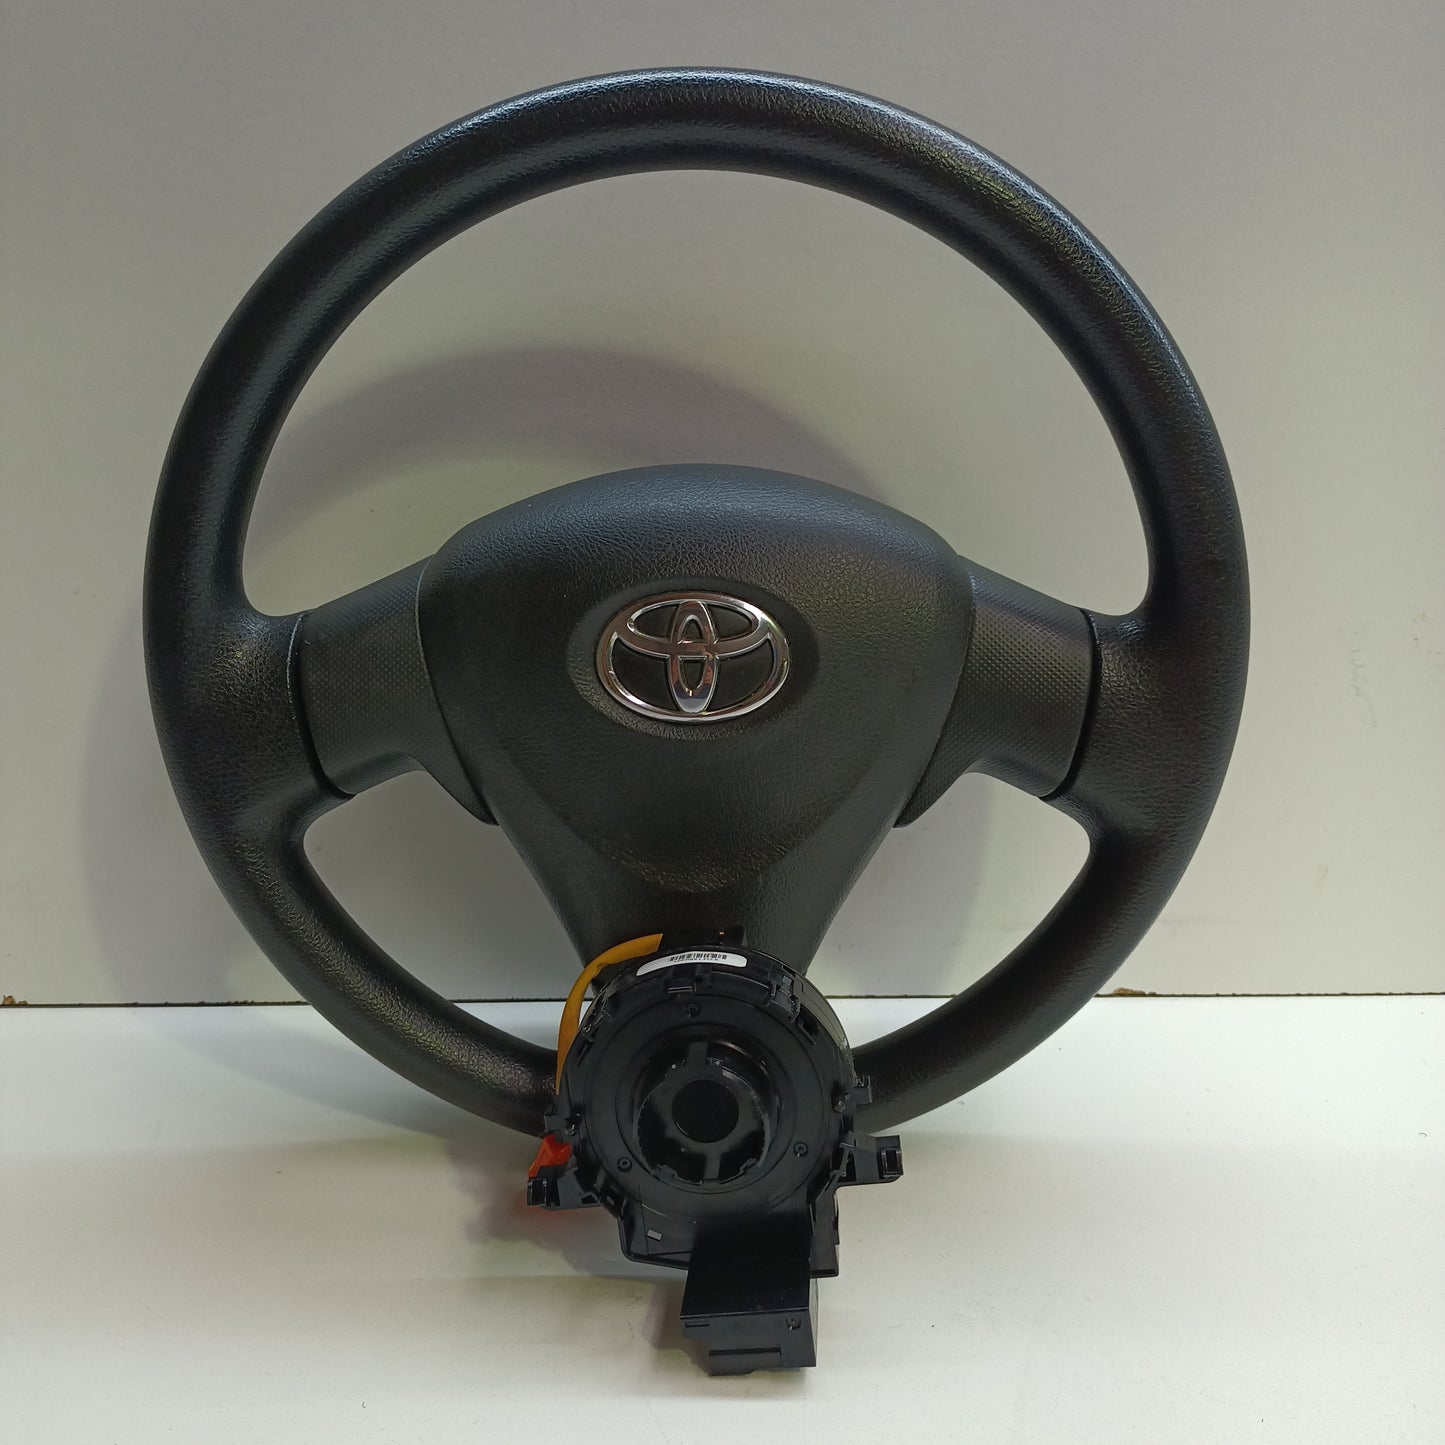 Toyota Corolla Hatchback Steering Wheel Vinyl Type ZRE152R 2007 2008 2009